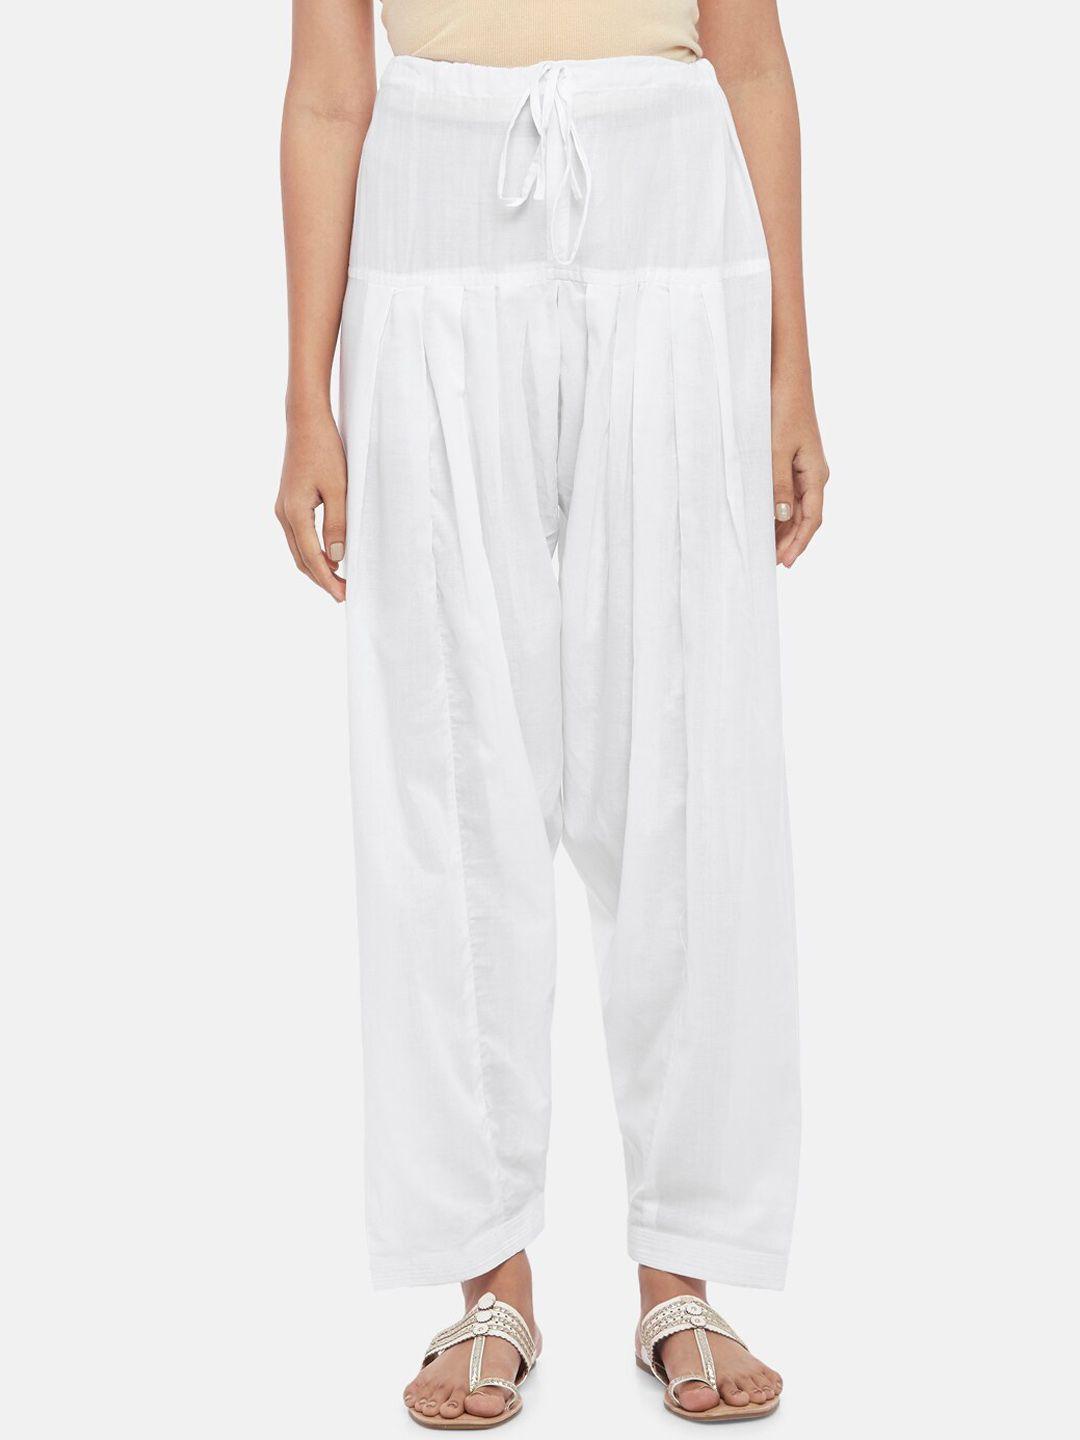 rangmanch by pantaloons women white  solid cotton salwar